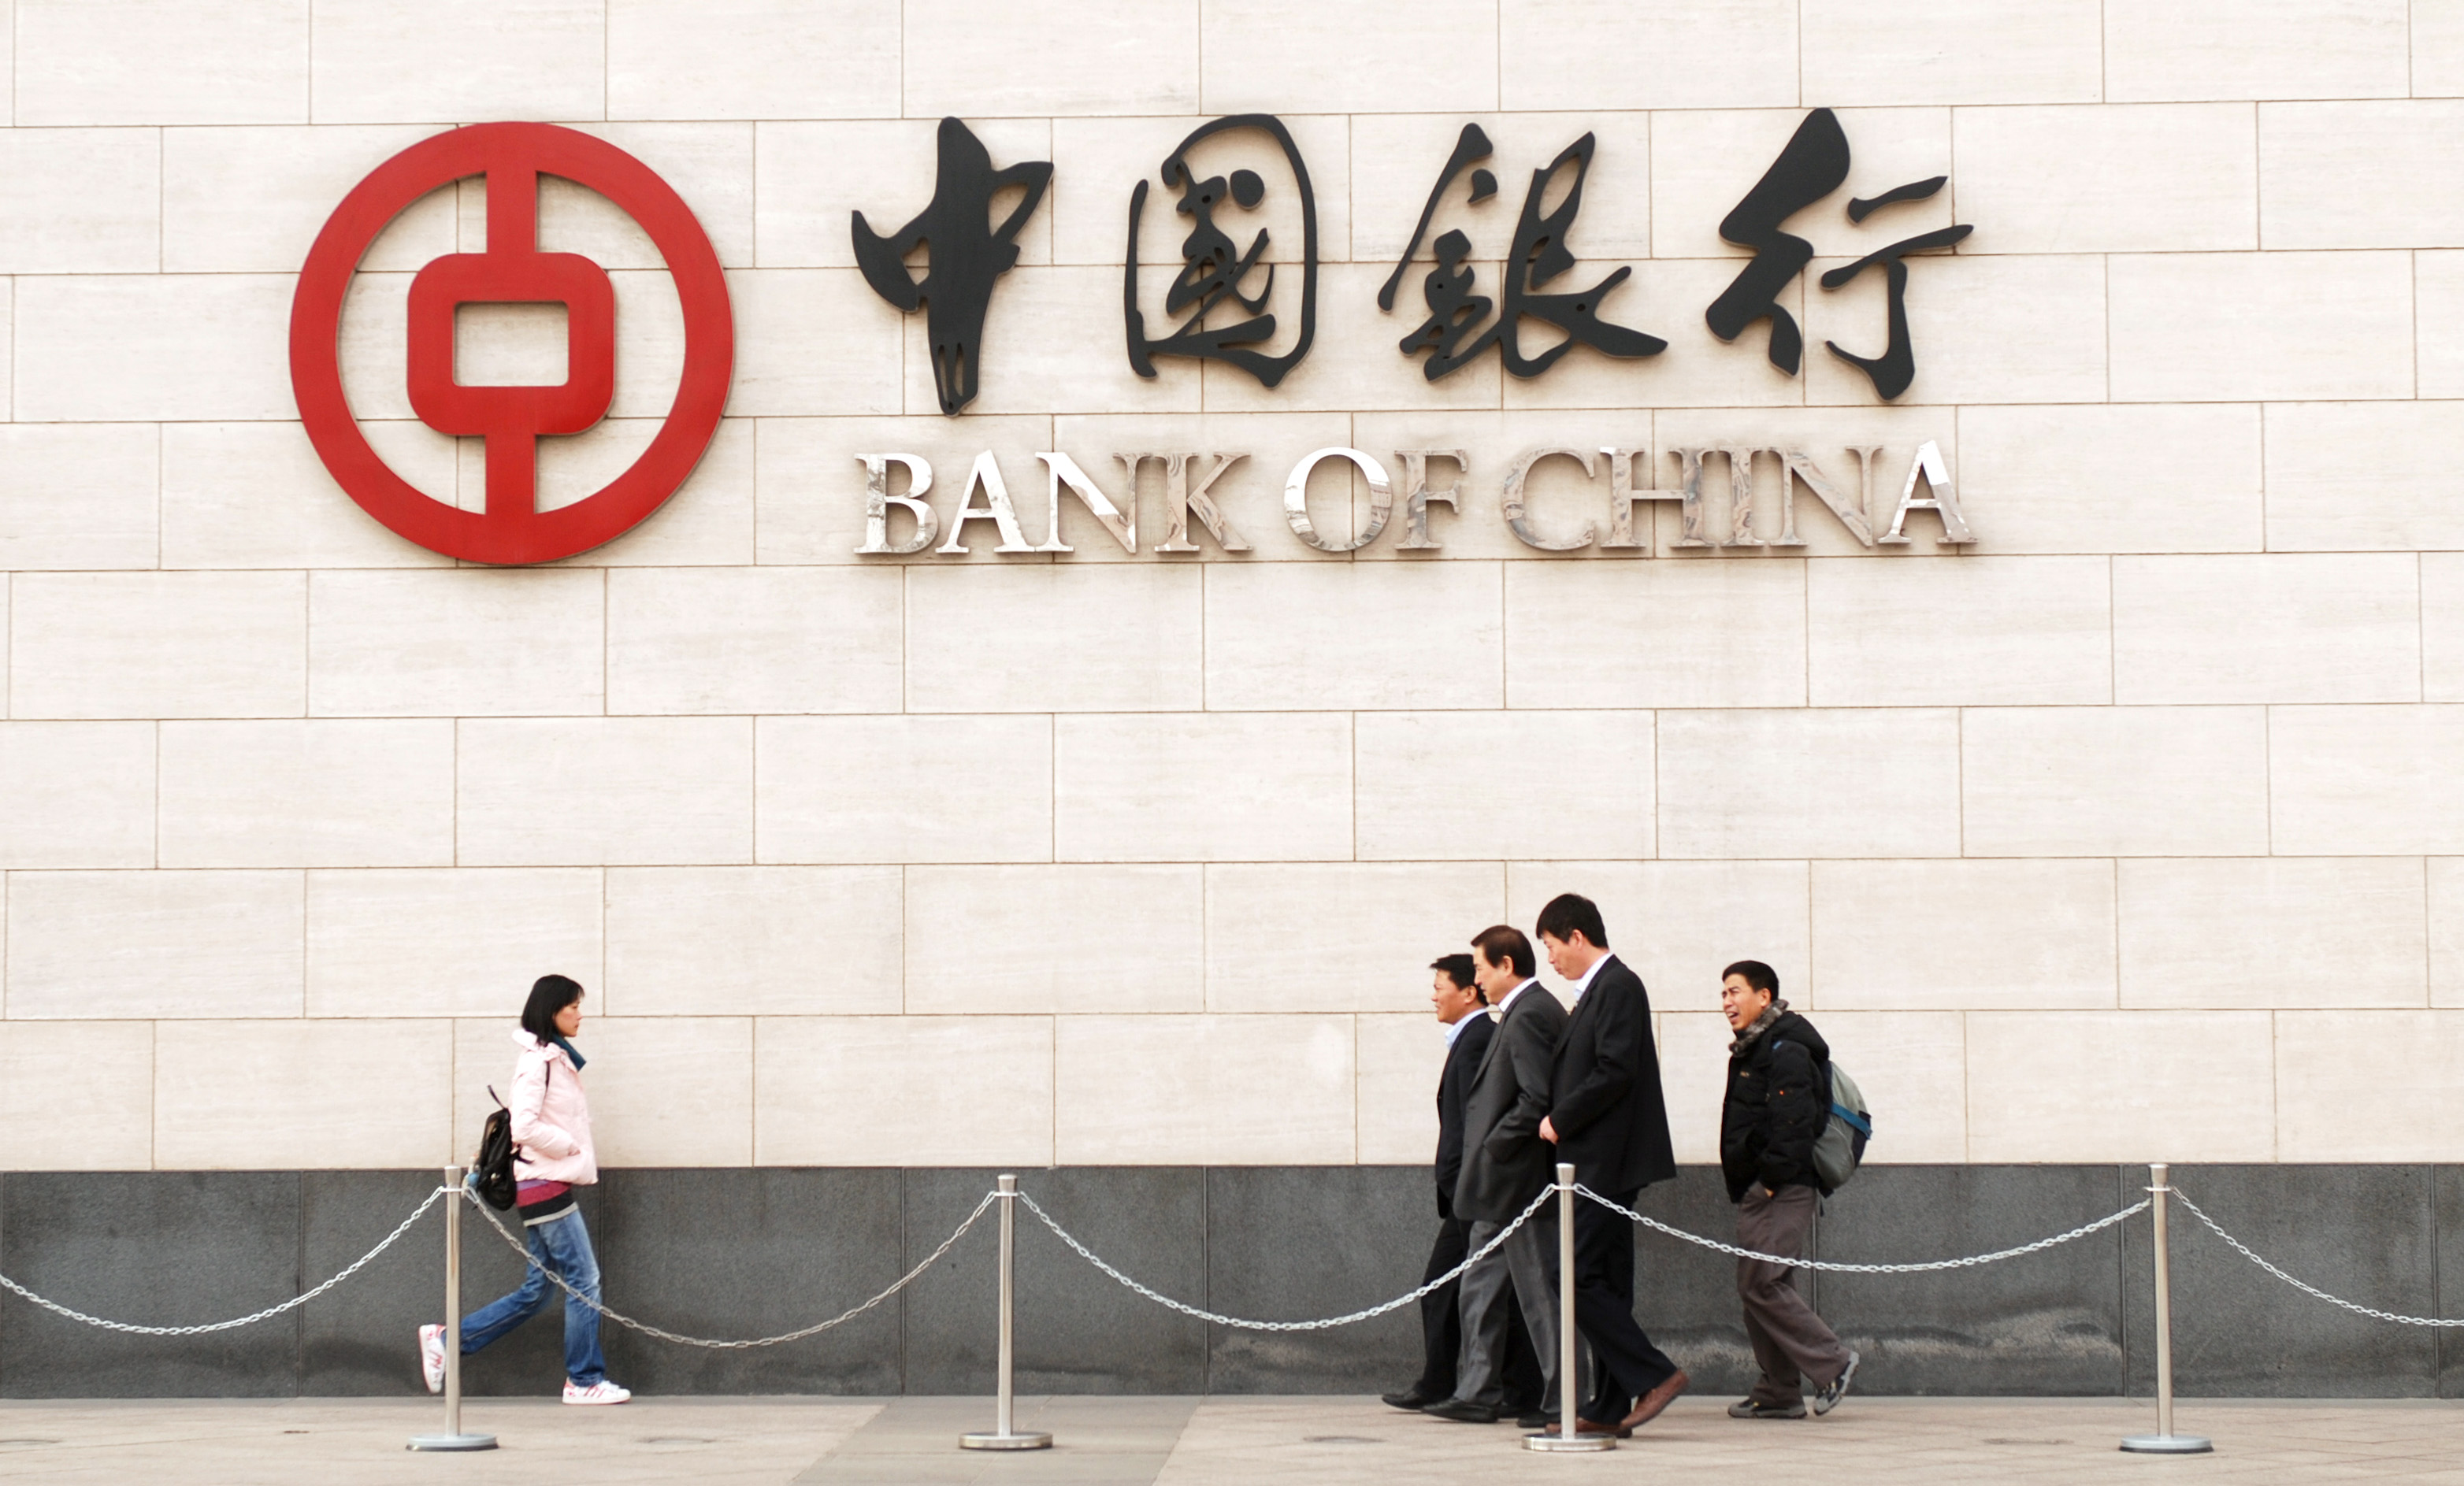 Сайт банка китая. Китайский банк. Логотипы банков Китая. Банк Китая (Bank of China). Chinatown банк Китая.